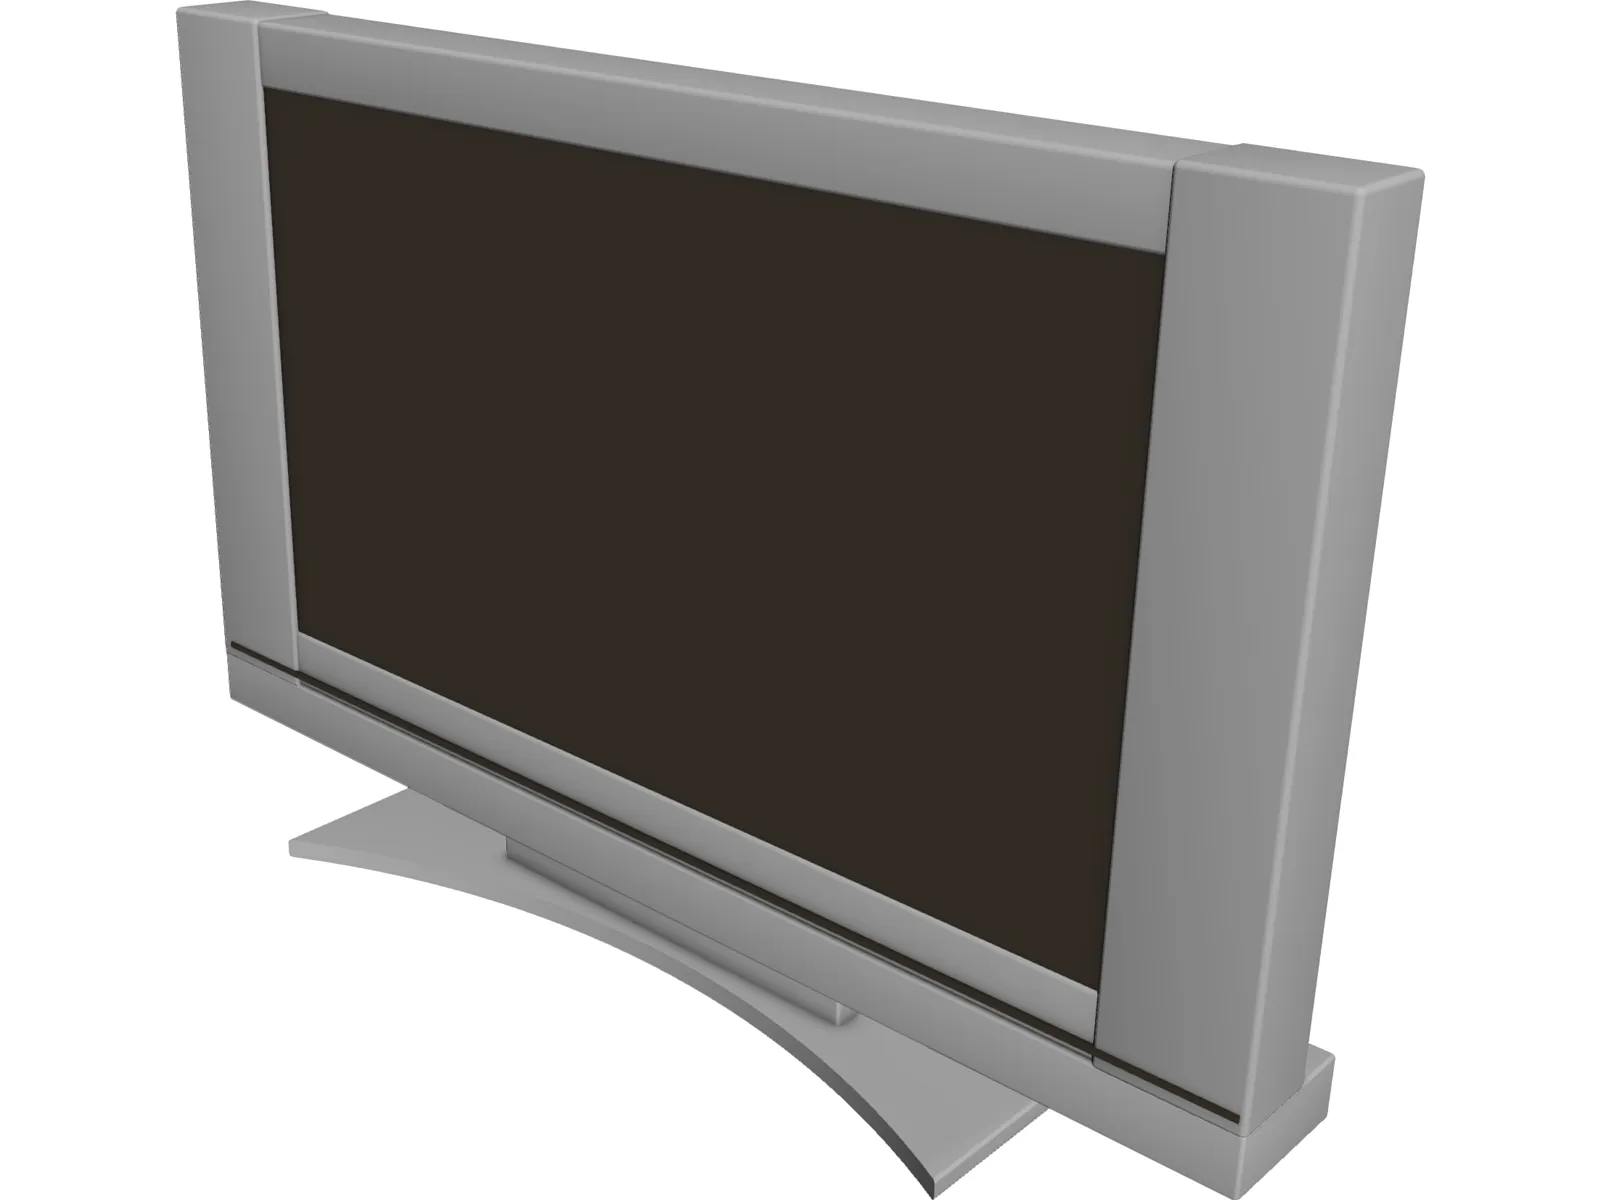 Plasma LCD Flatscreen TV 3D Model